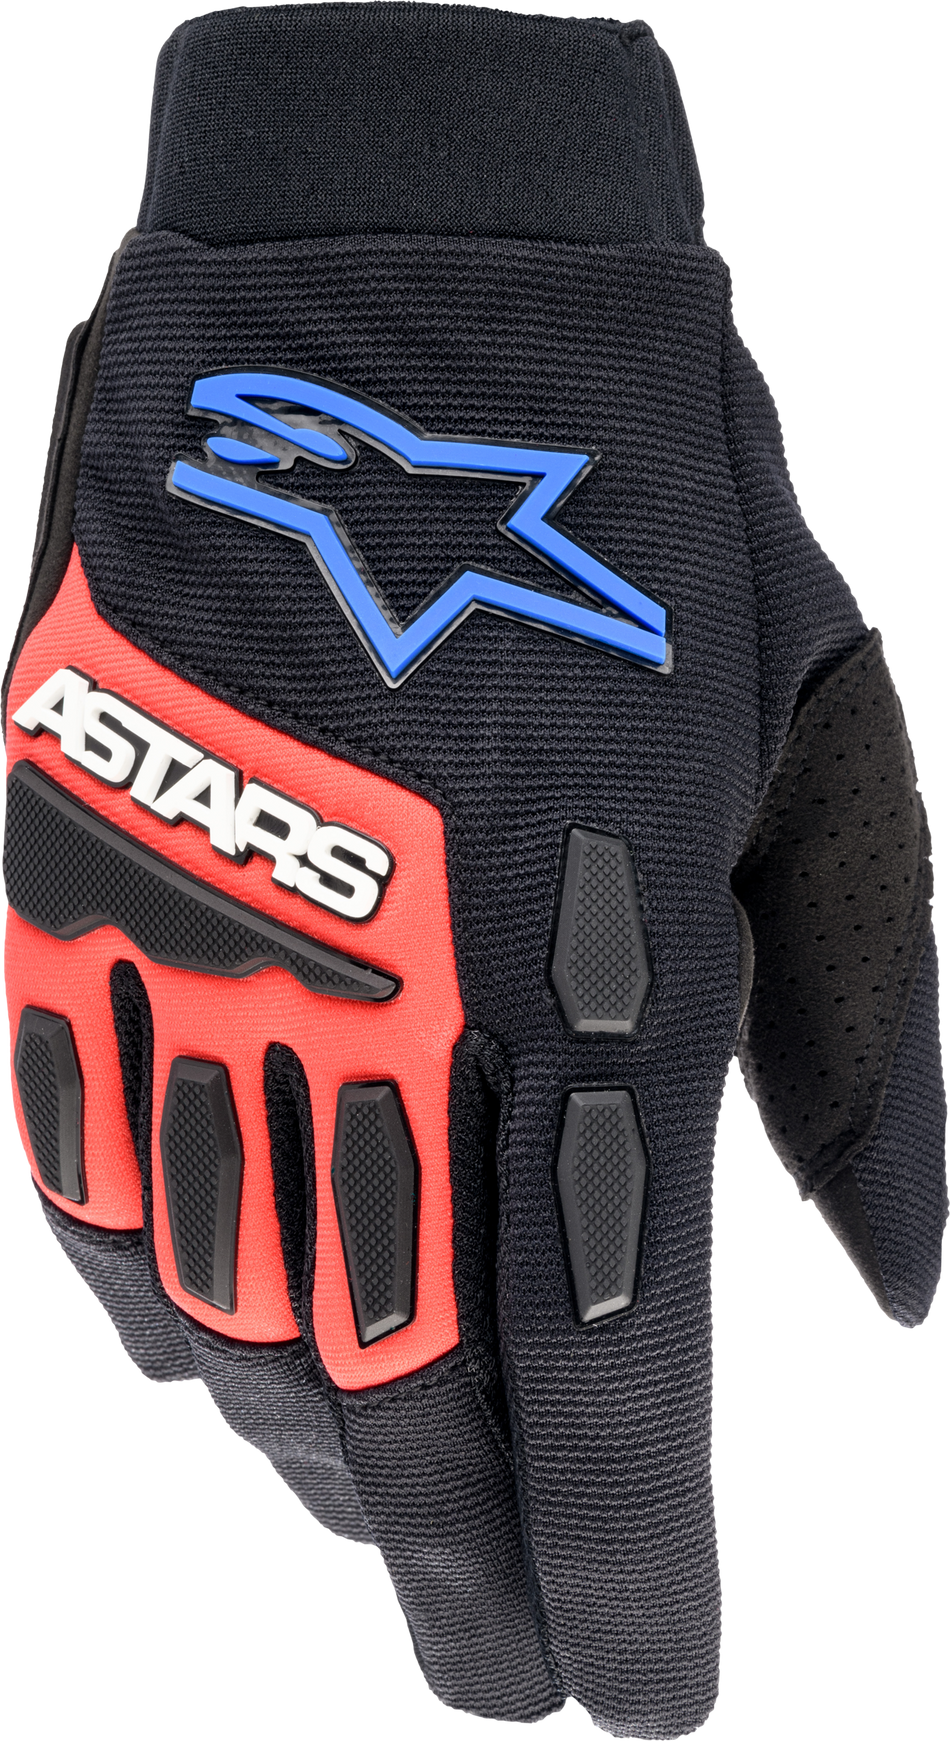 ALPINESTARS Full Bore Xt Gloves Black/Bright Blue/Red Xl 3563623-1317-XL